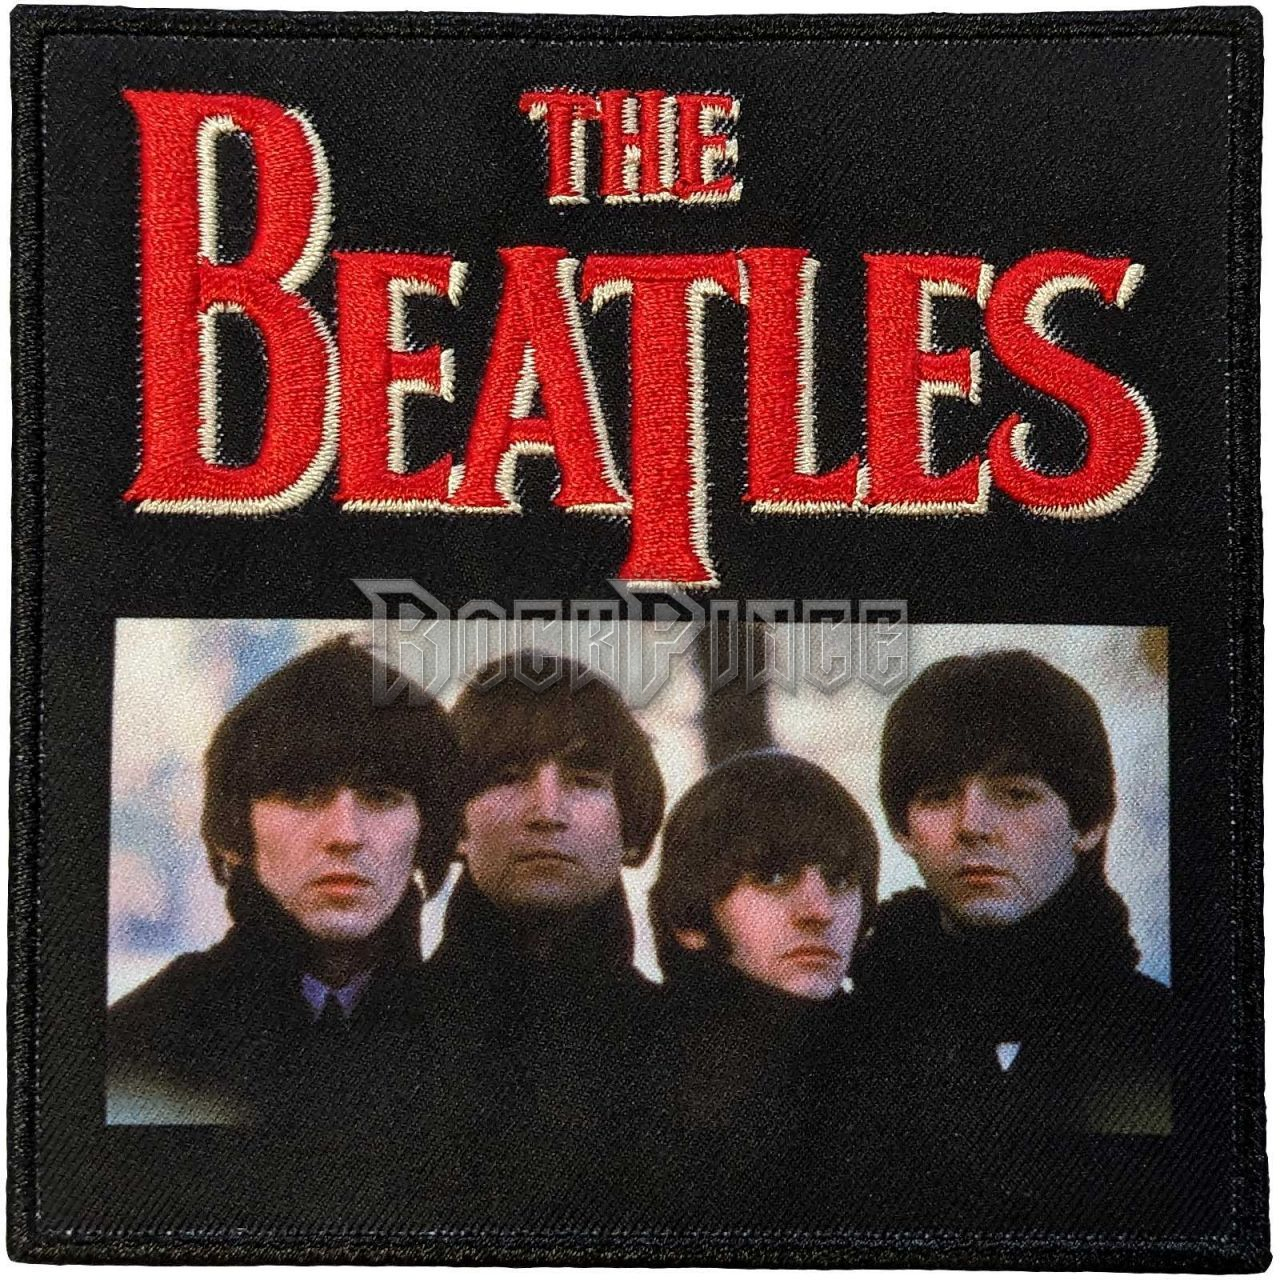 The Beatles - Beatles For Sale Photo - kisfelvarró - BEATPAT08